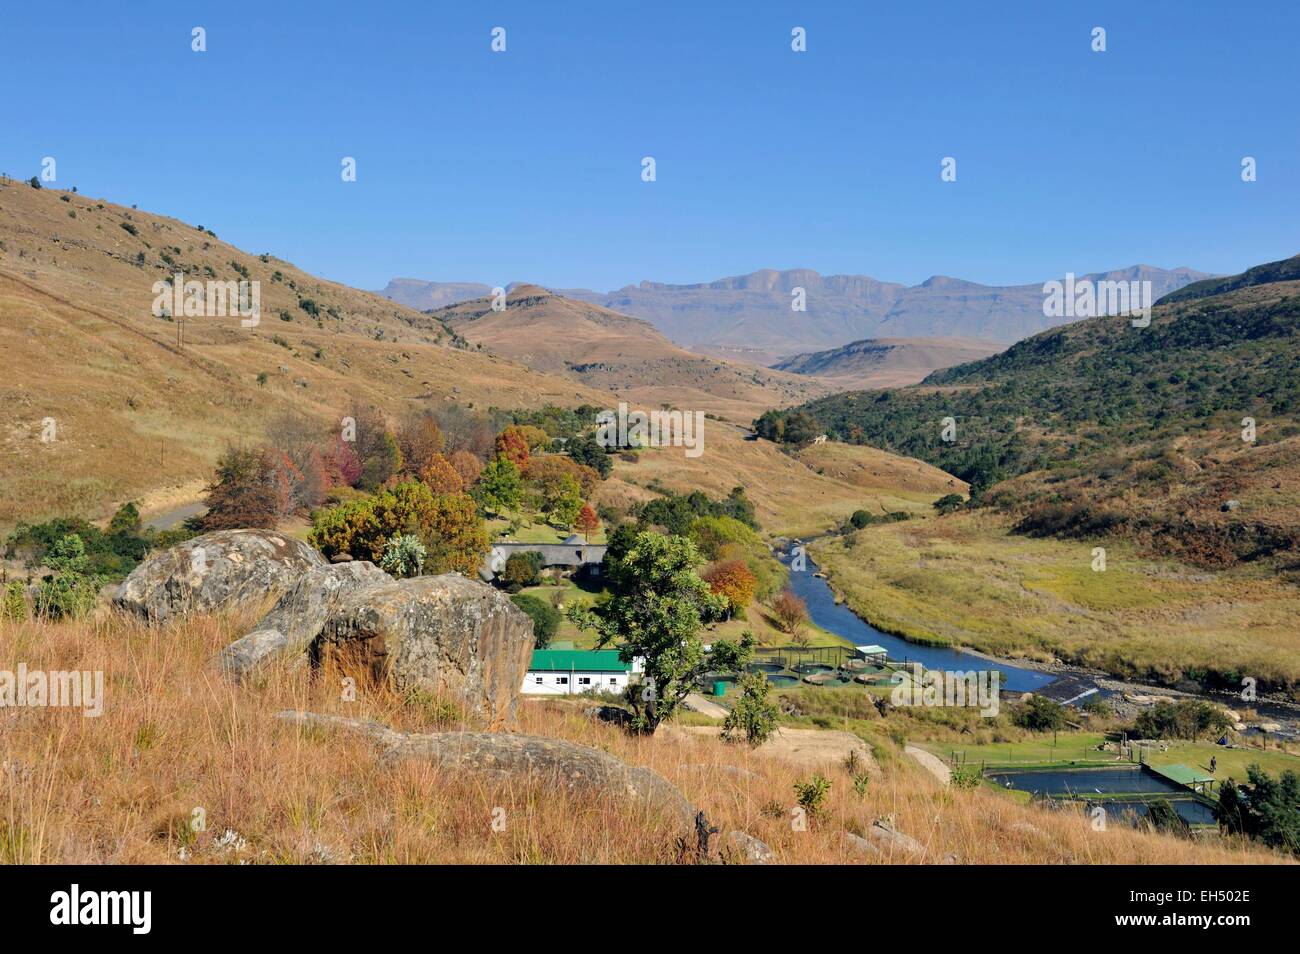 South Africa, Kwazulu Natal, Drakensberg mountains, uKhahlamba Park, listed as World Heritage by UNESCO, Giant's Castle Valley Stock Photo